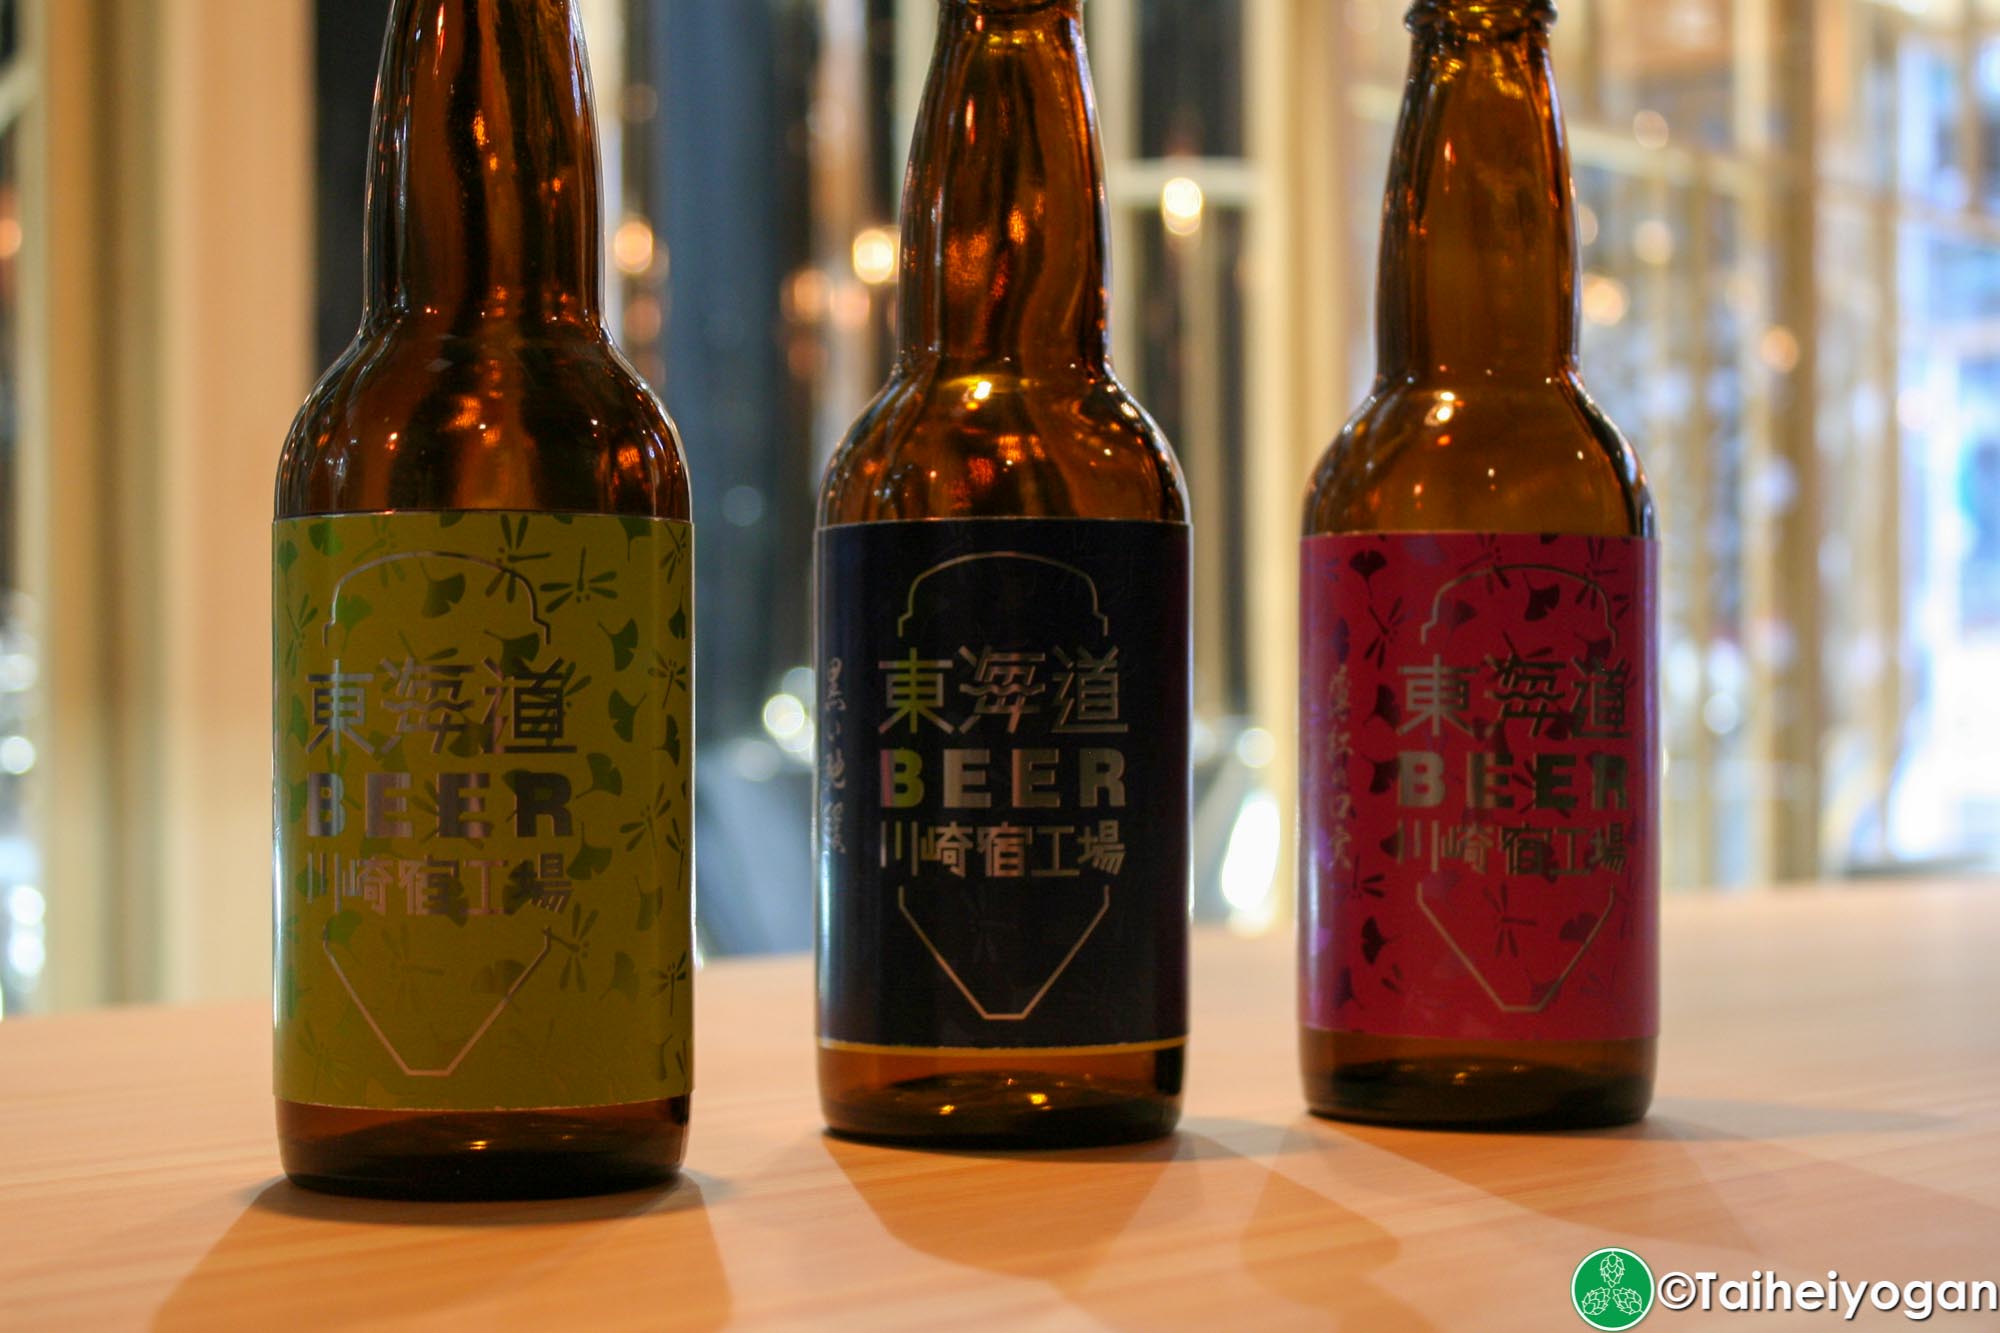 Tokaido Beer - Beer